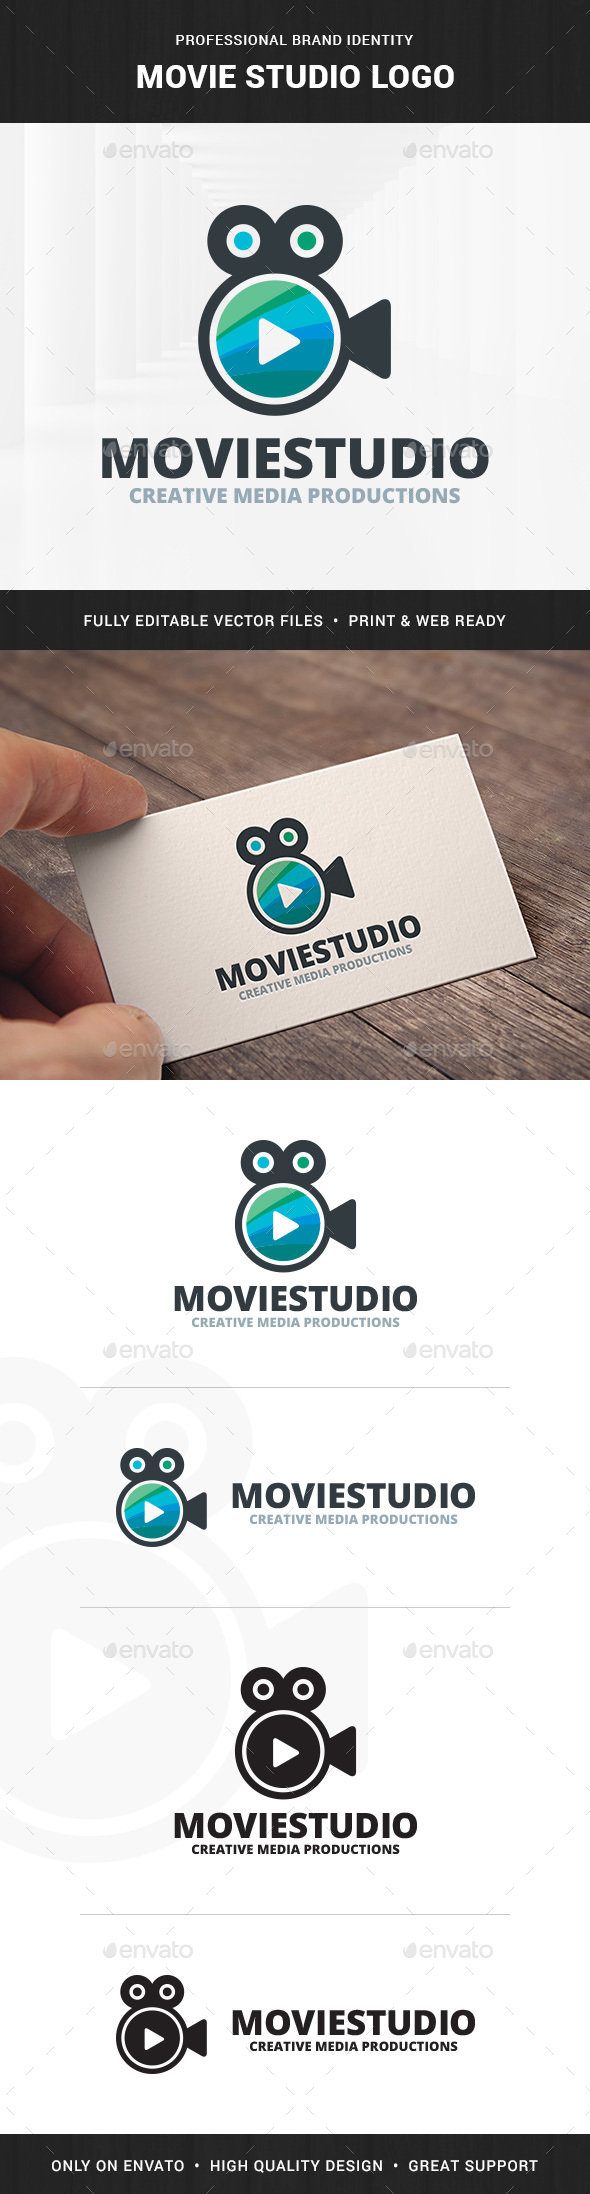 Movie Studio Logo Template